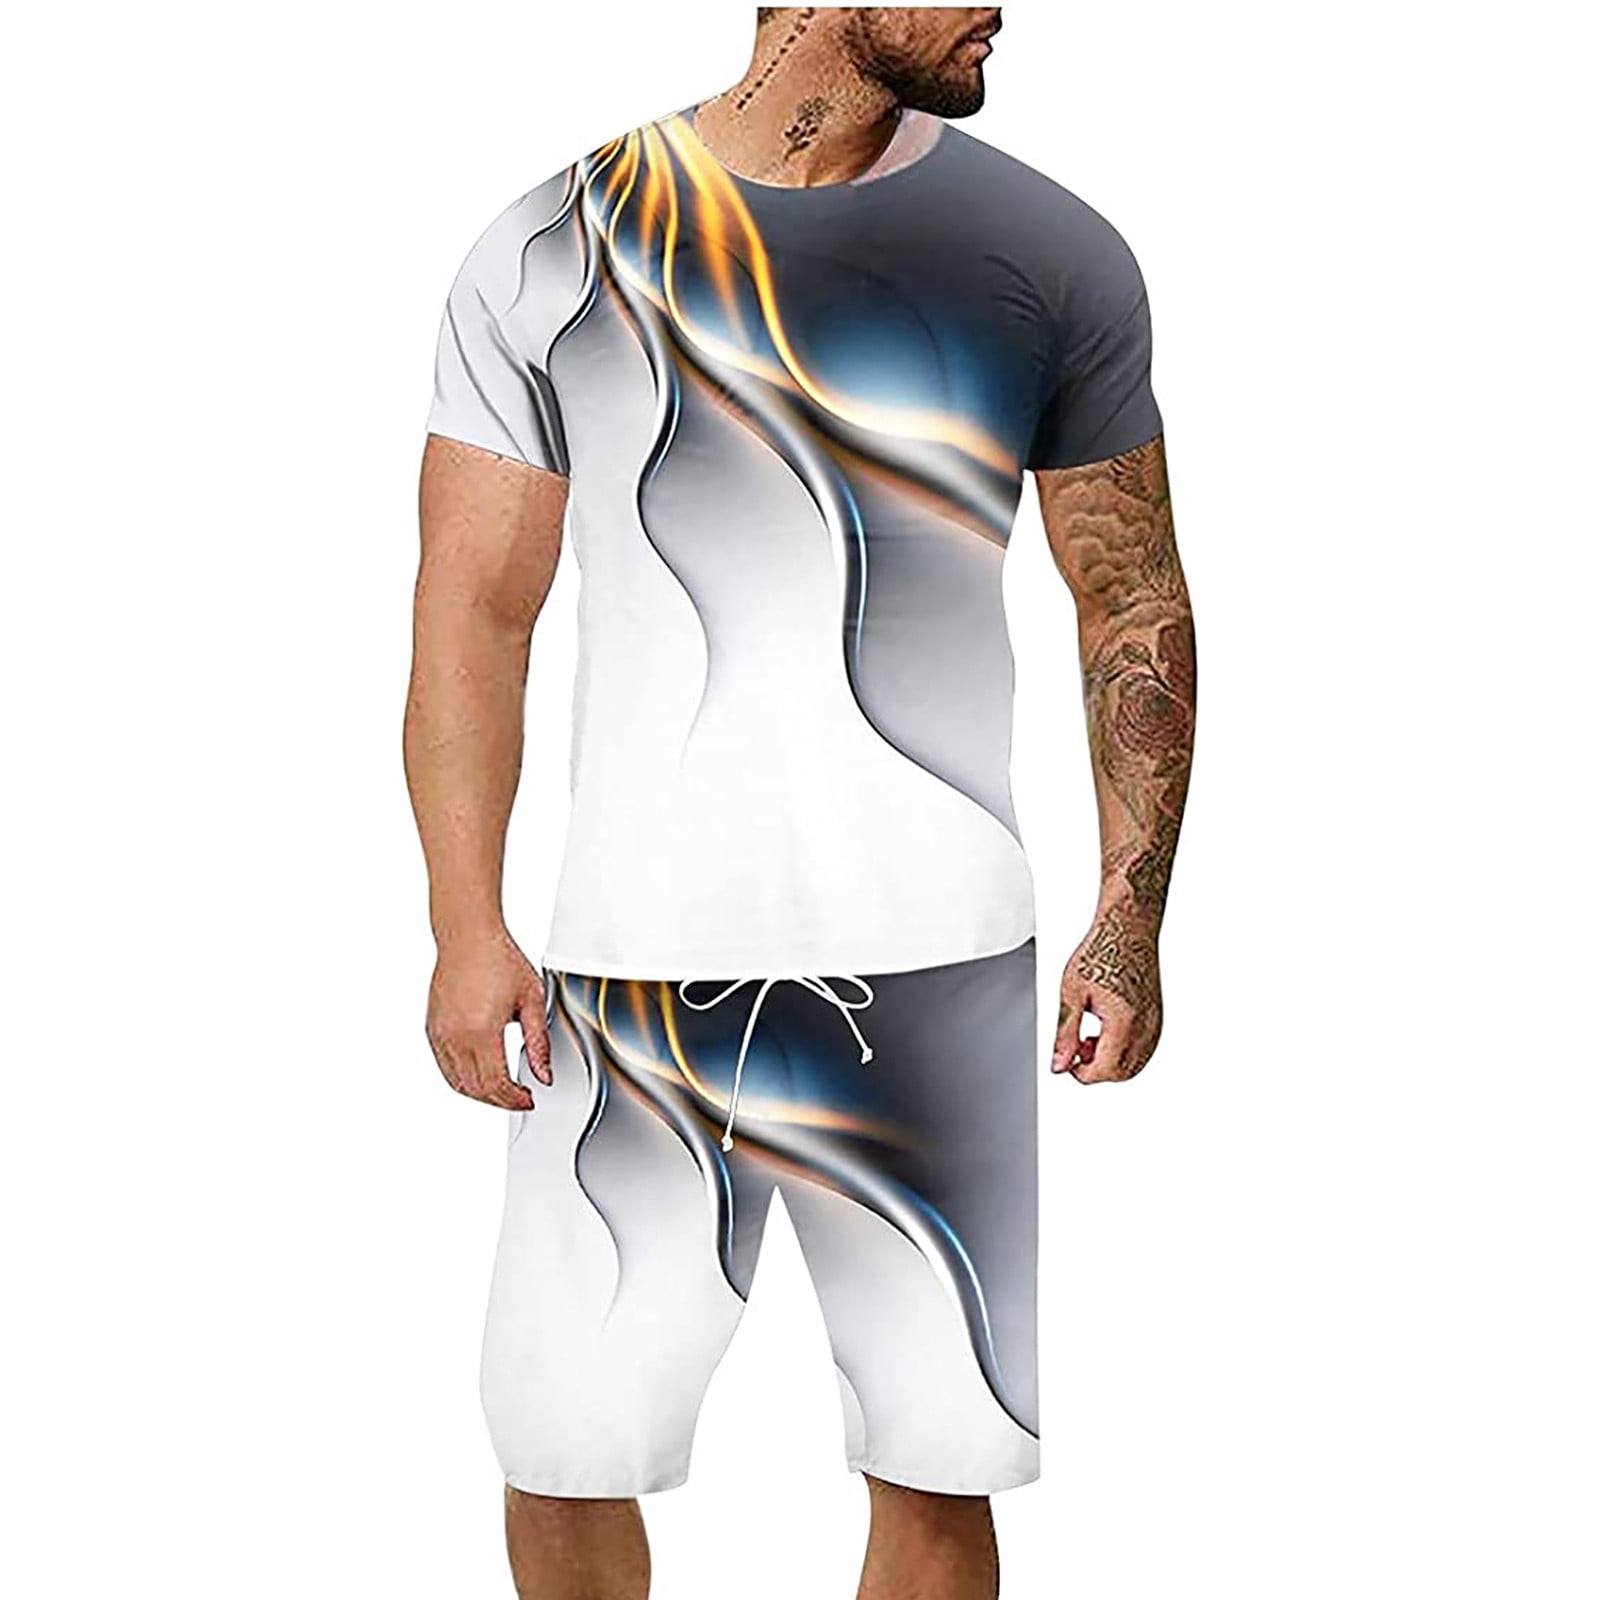 SDJMa Men's Relaxed Fit Heavyweight Short-SleeveMen's Sports Running  Basketball Training Suit Quick-drying Short-sleeved T-shirt